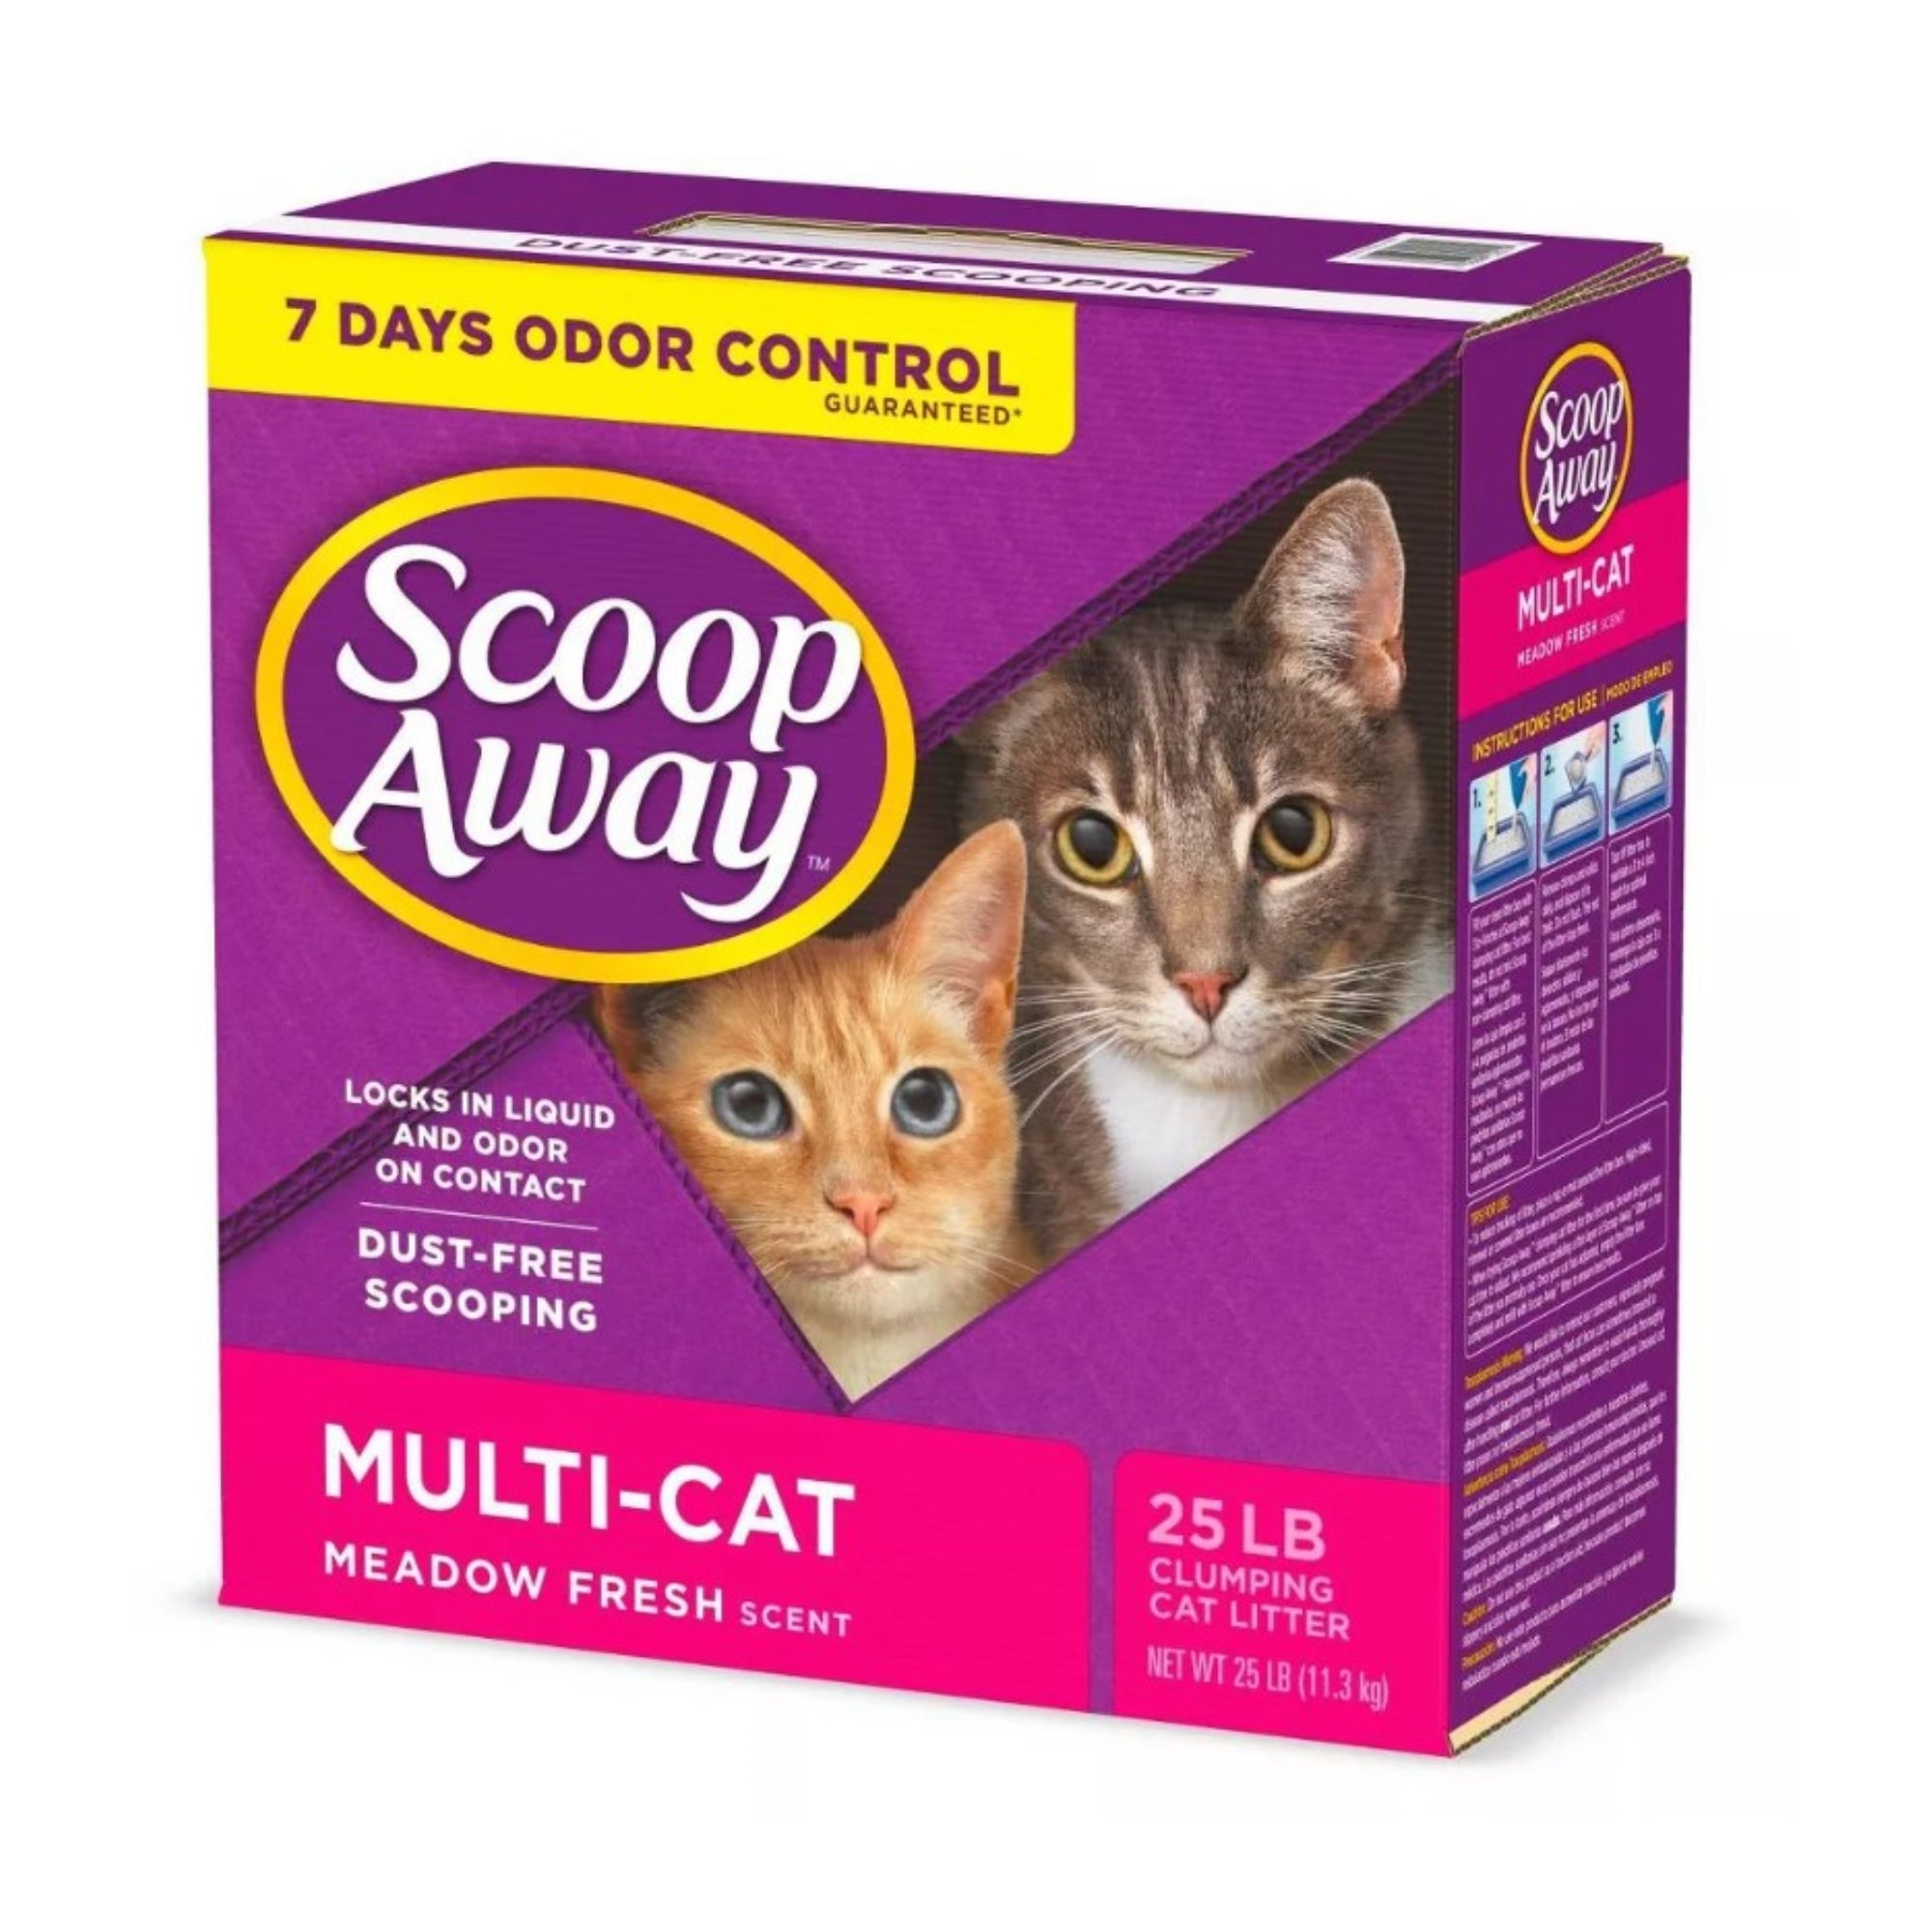 Scoop Away Multi-Cat Formula Clumping Cat Litter, Meadow Fresh Scent, 25lb